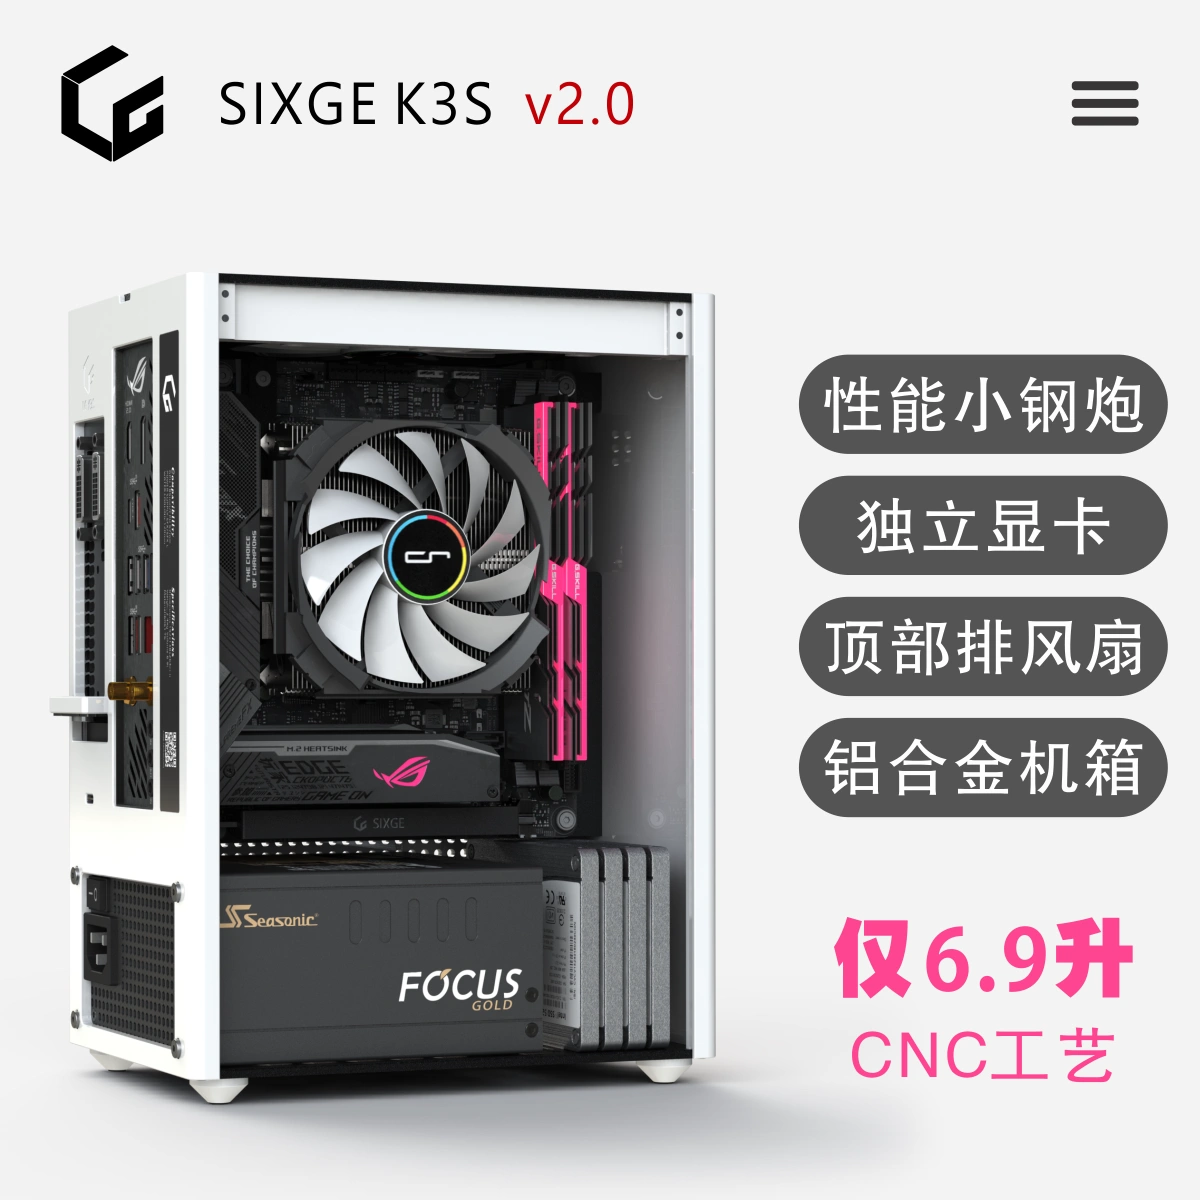 4.0版本]SIXGE K2S机箱MINI ITX A4迷你CNC k39 ghost s1 lgk2s-Taobao